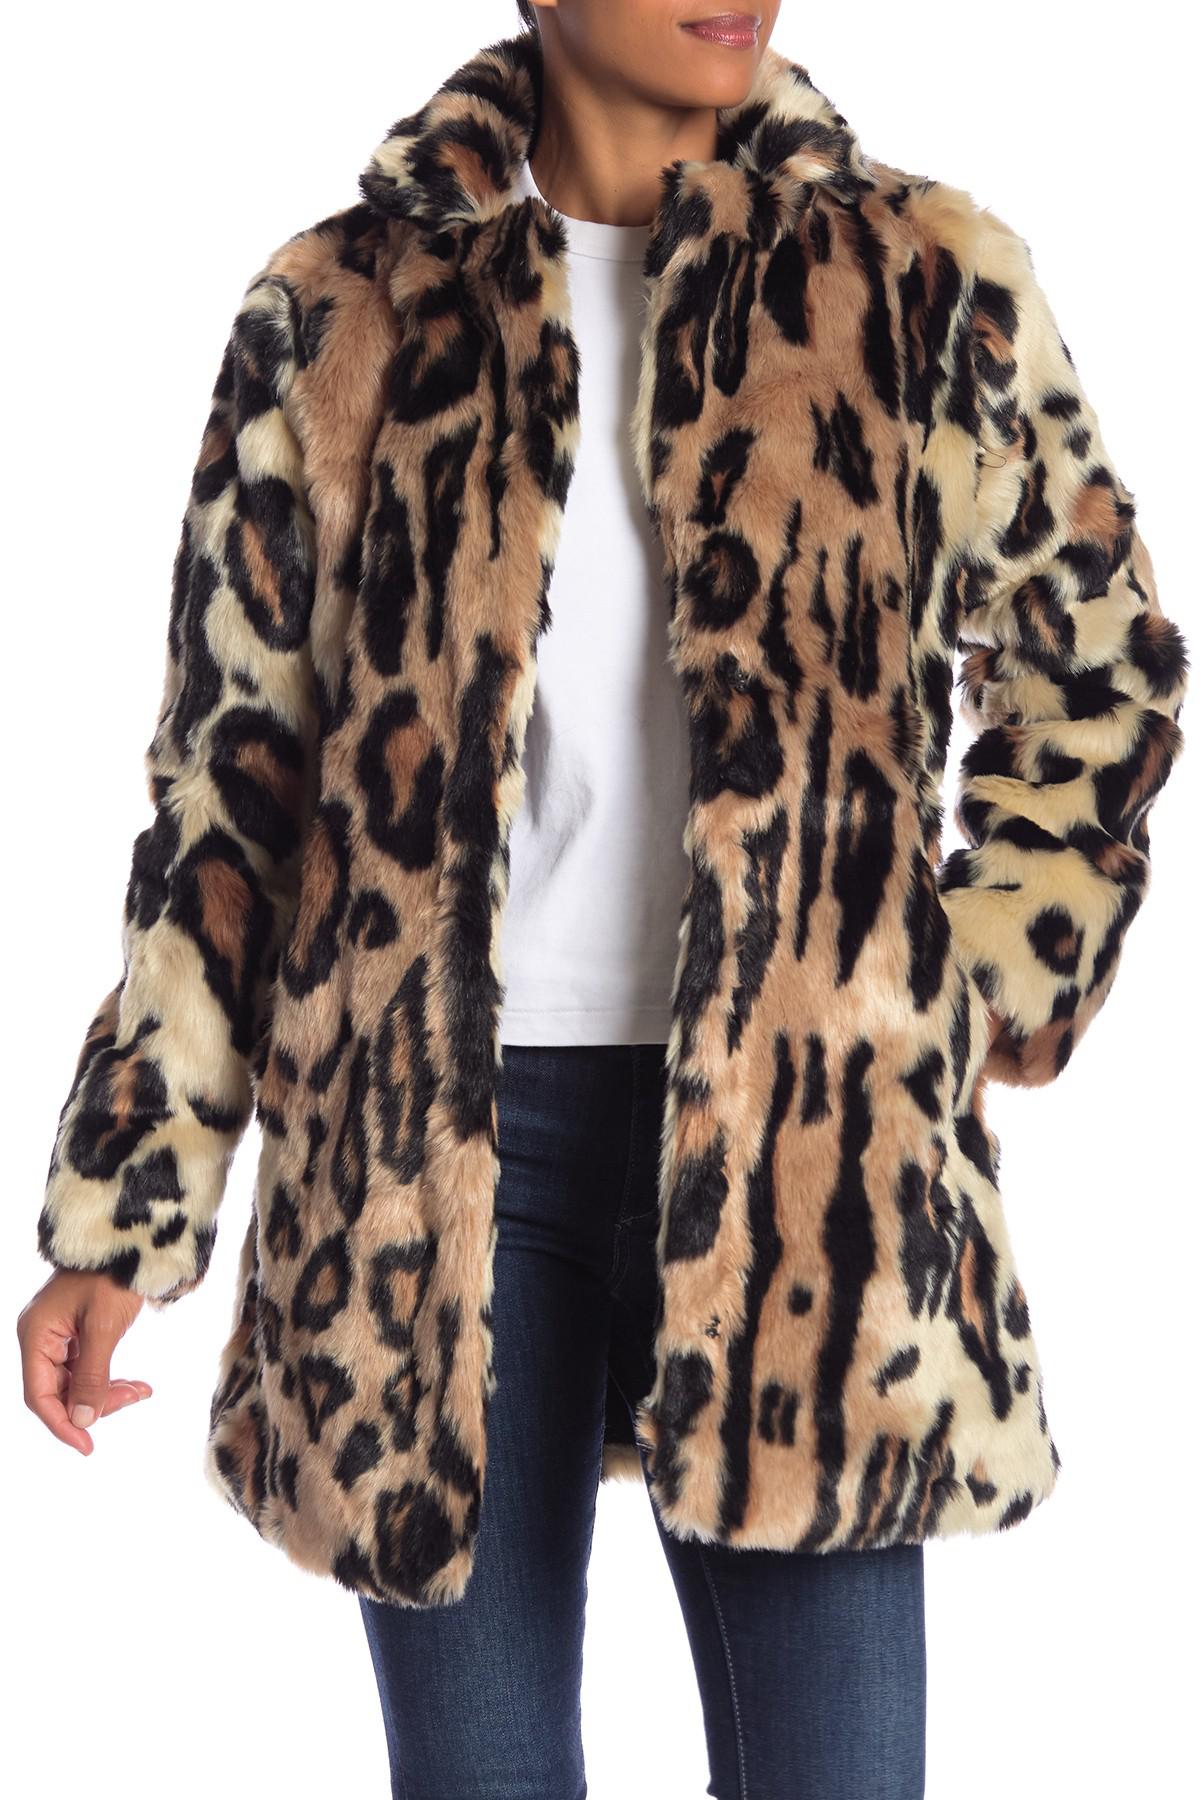 Jessica Simpson Animal Print Faux Fur Coat in Leopard (Brown) - Lyst